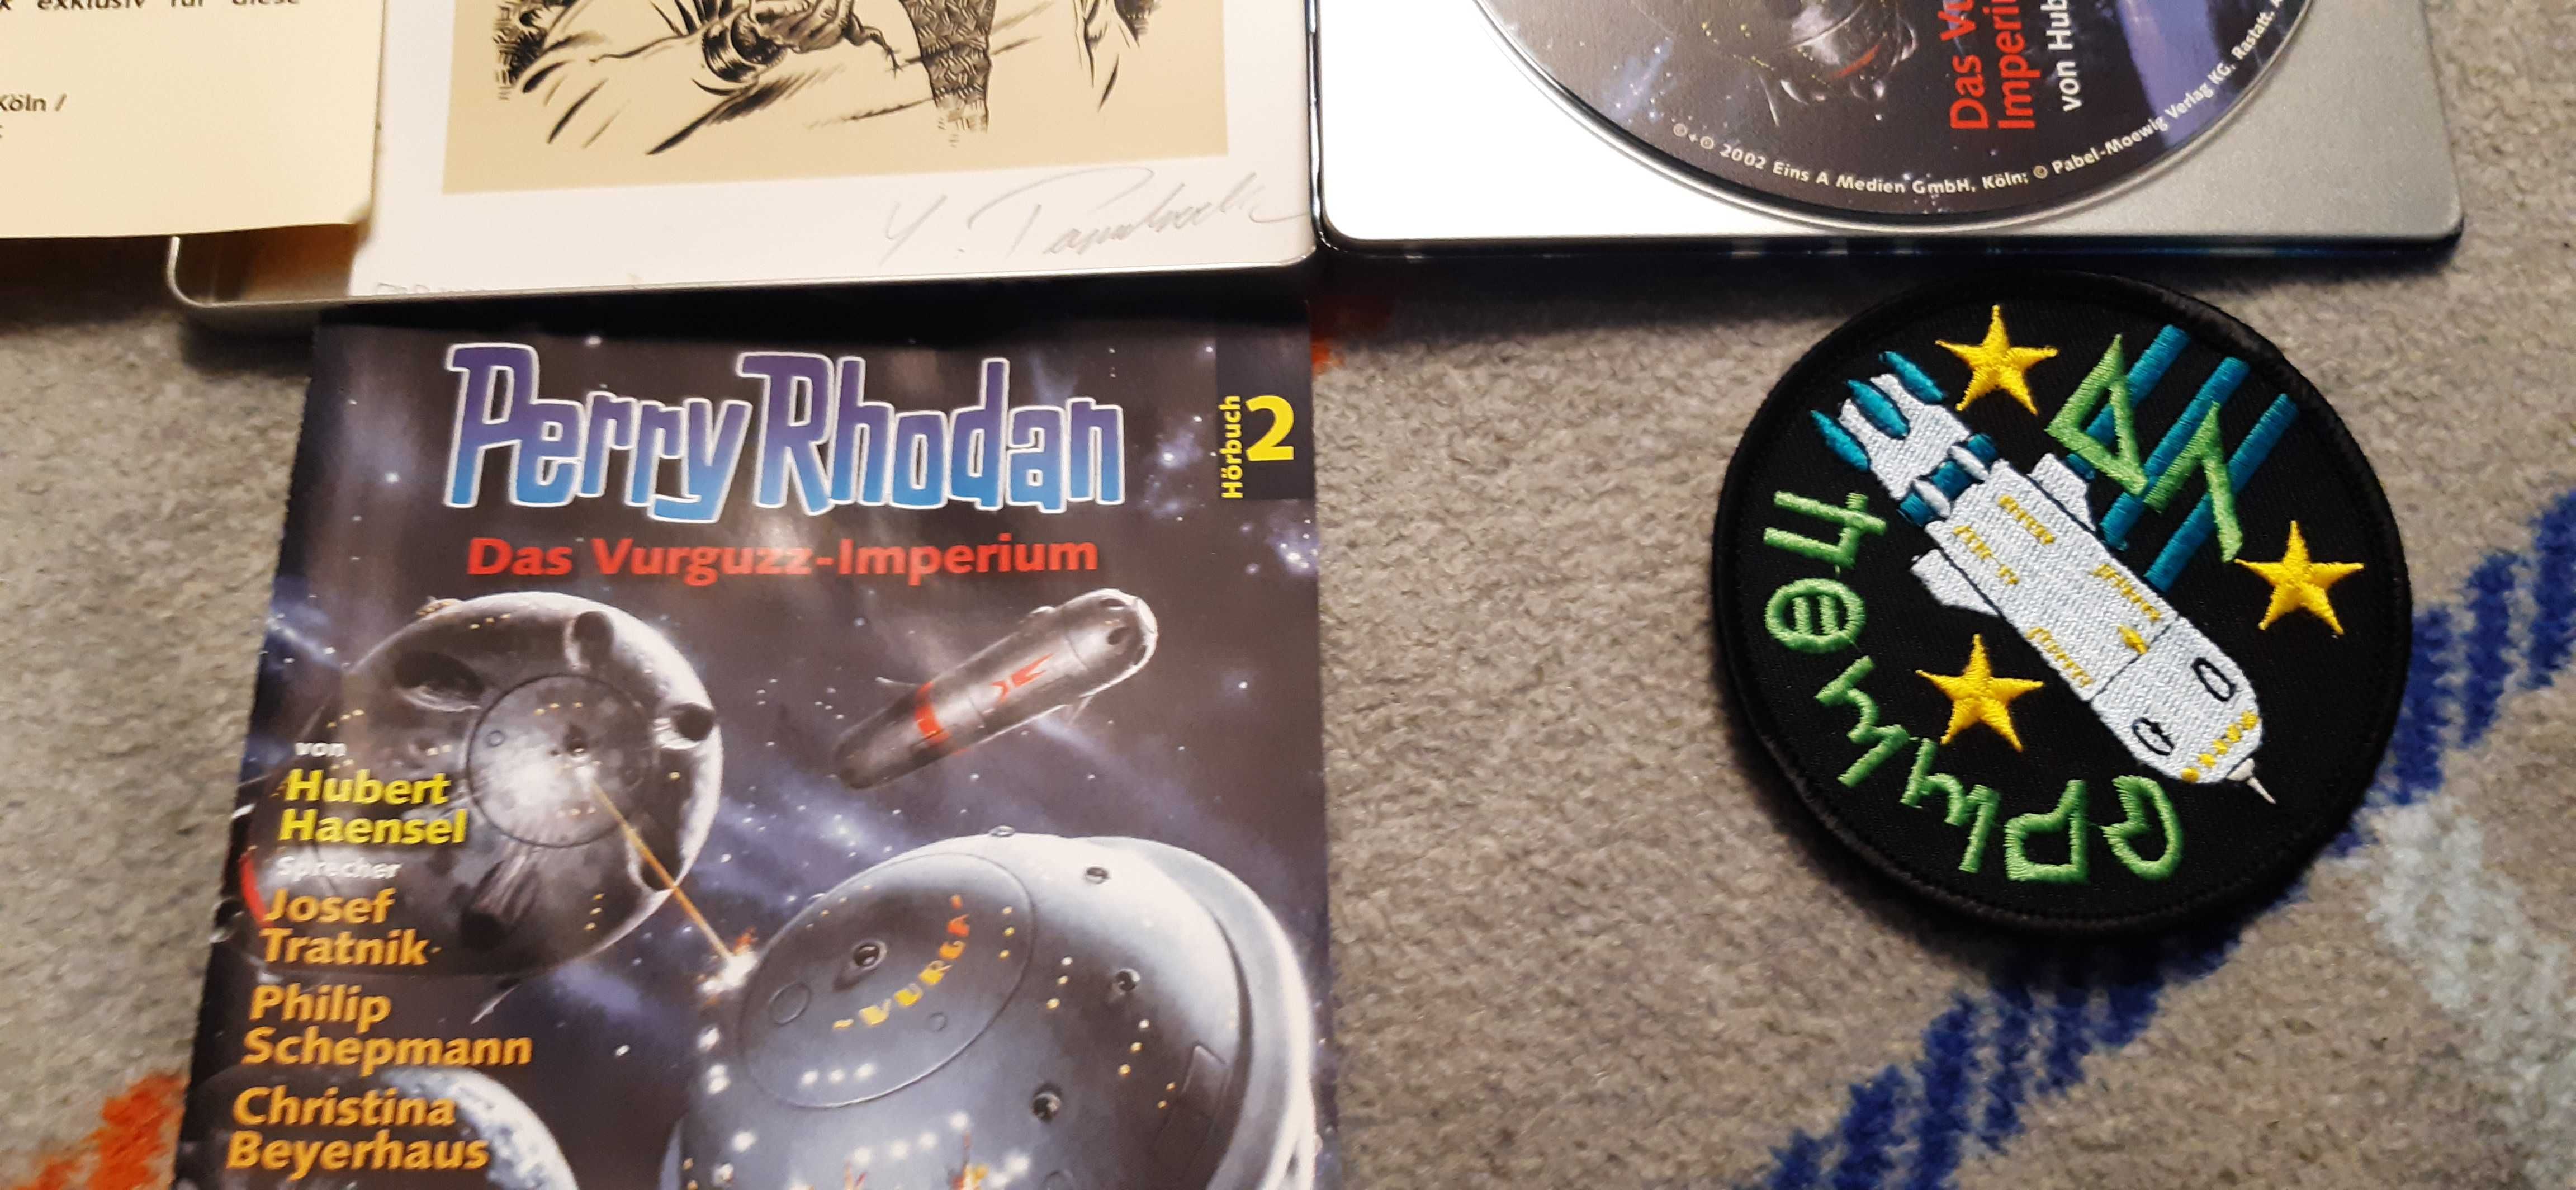 płyta cd perry rhodan plus dodatki naszywka arty steelbook